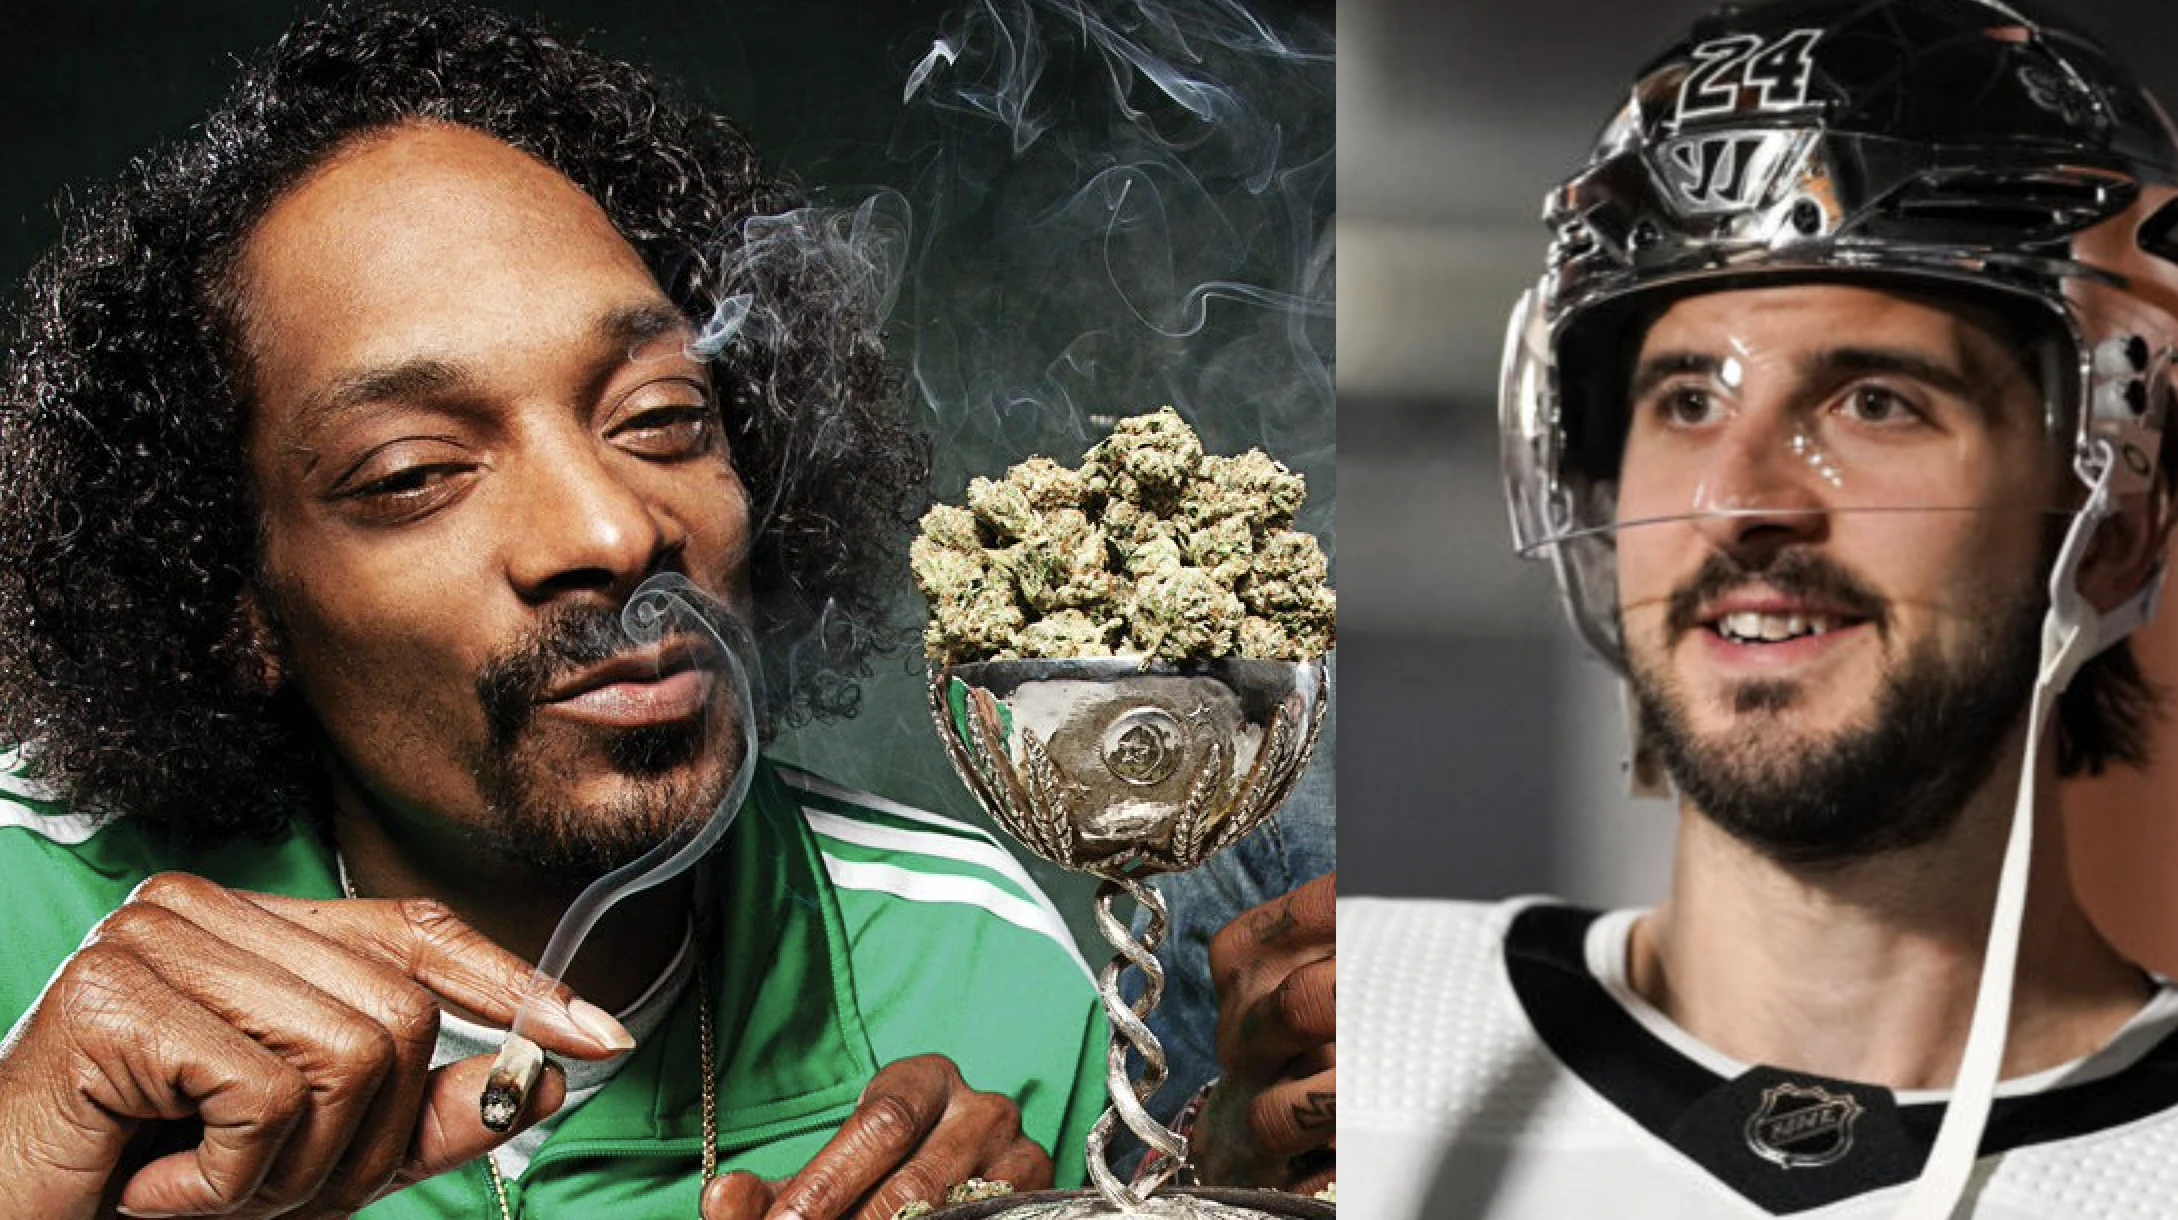 Phil Danault fume du POT avec Snoop Dogg?